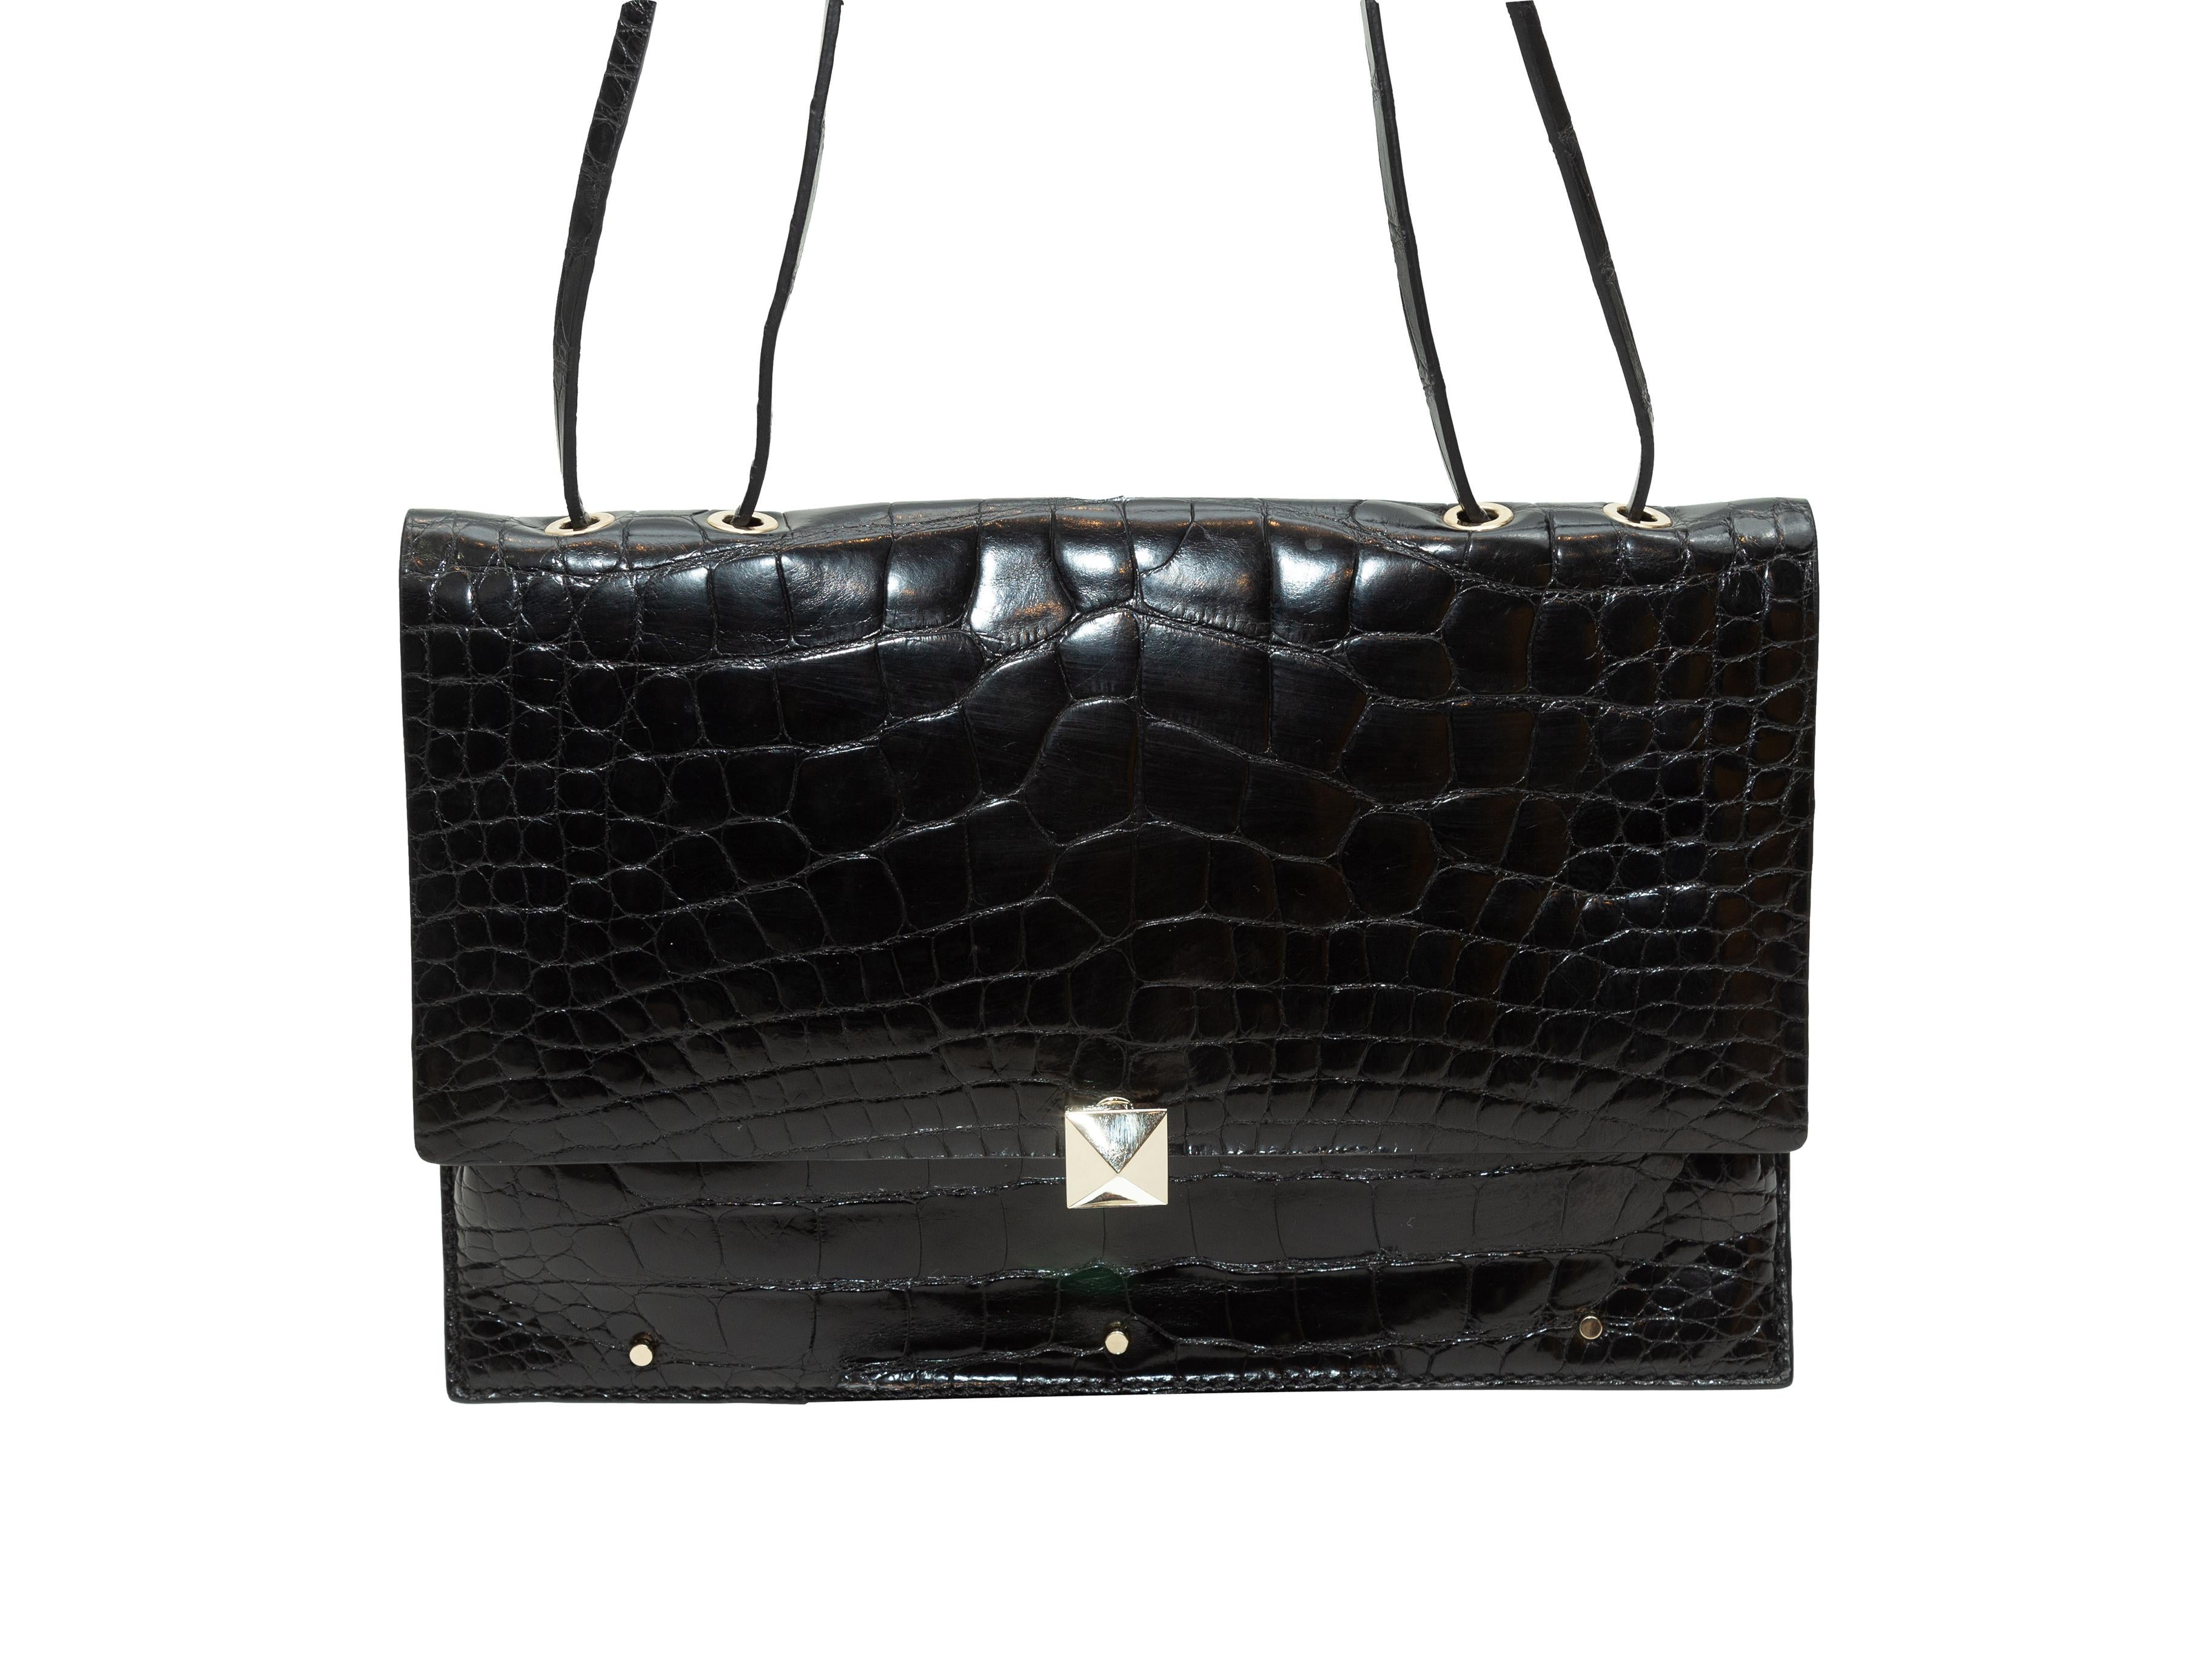 Product details: Black crocodile shoulder bag by Valentino. Silver-tone hardware. Adjustable strap. Interior card slot pockets. Rockstud closure at front flap. 11.5